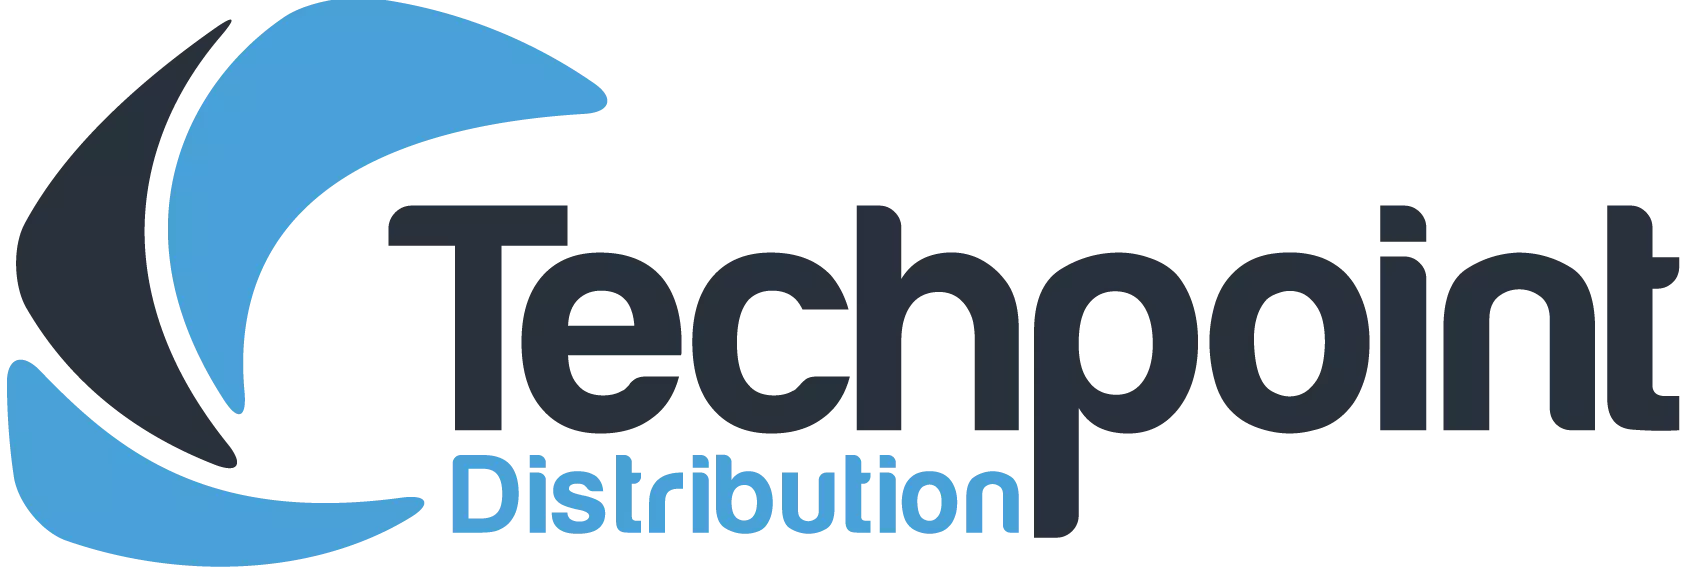 Techpoint Distribution Ltd